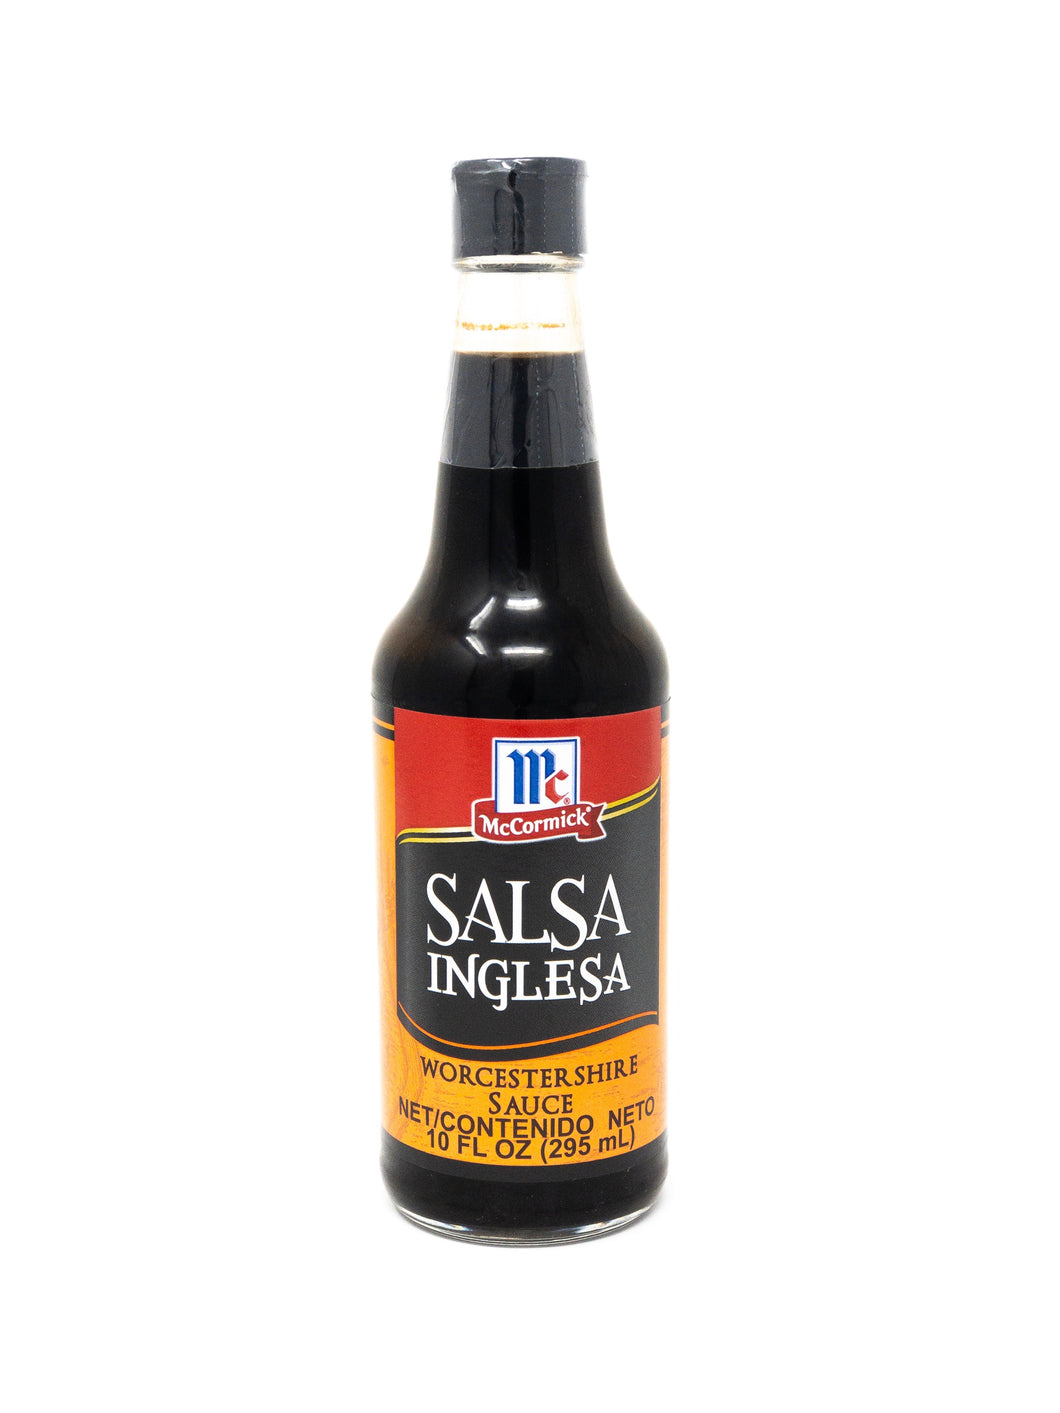 McCormick Salsa Inglesa (Worcestershire Sauce) 10oz